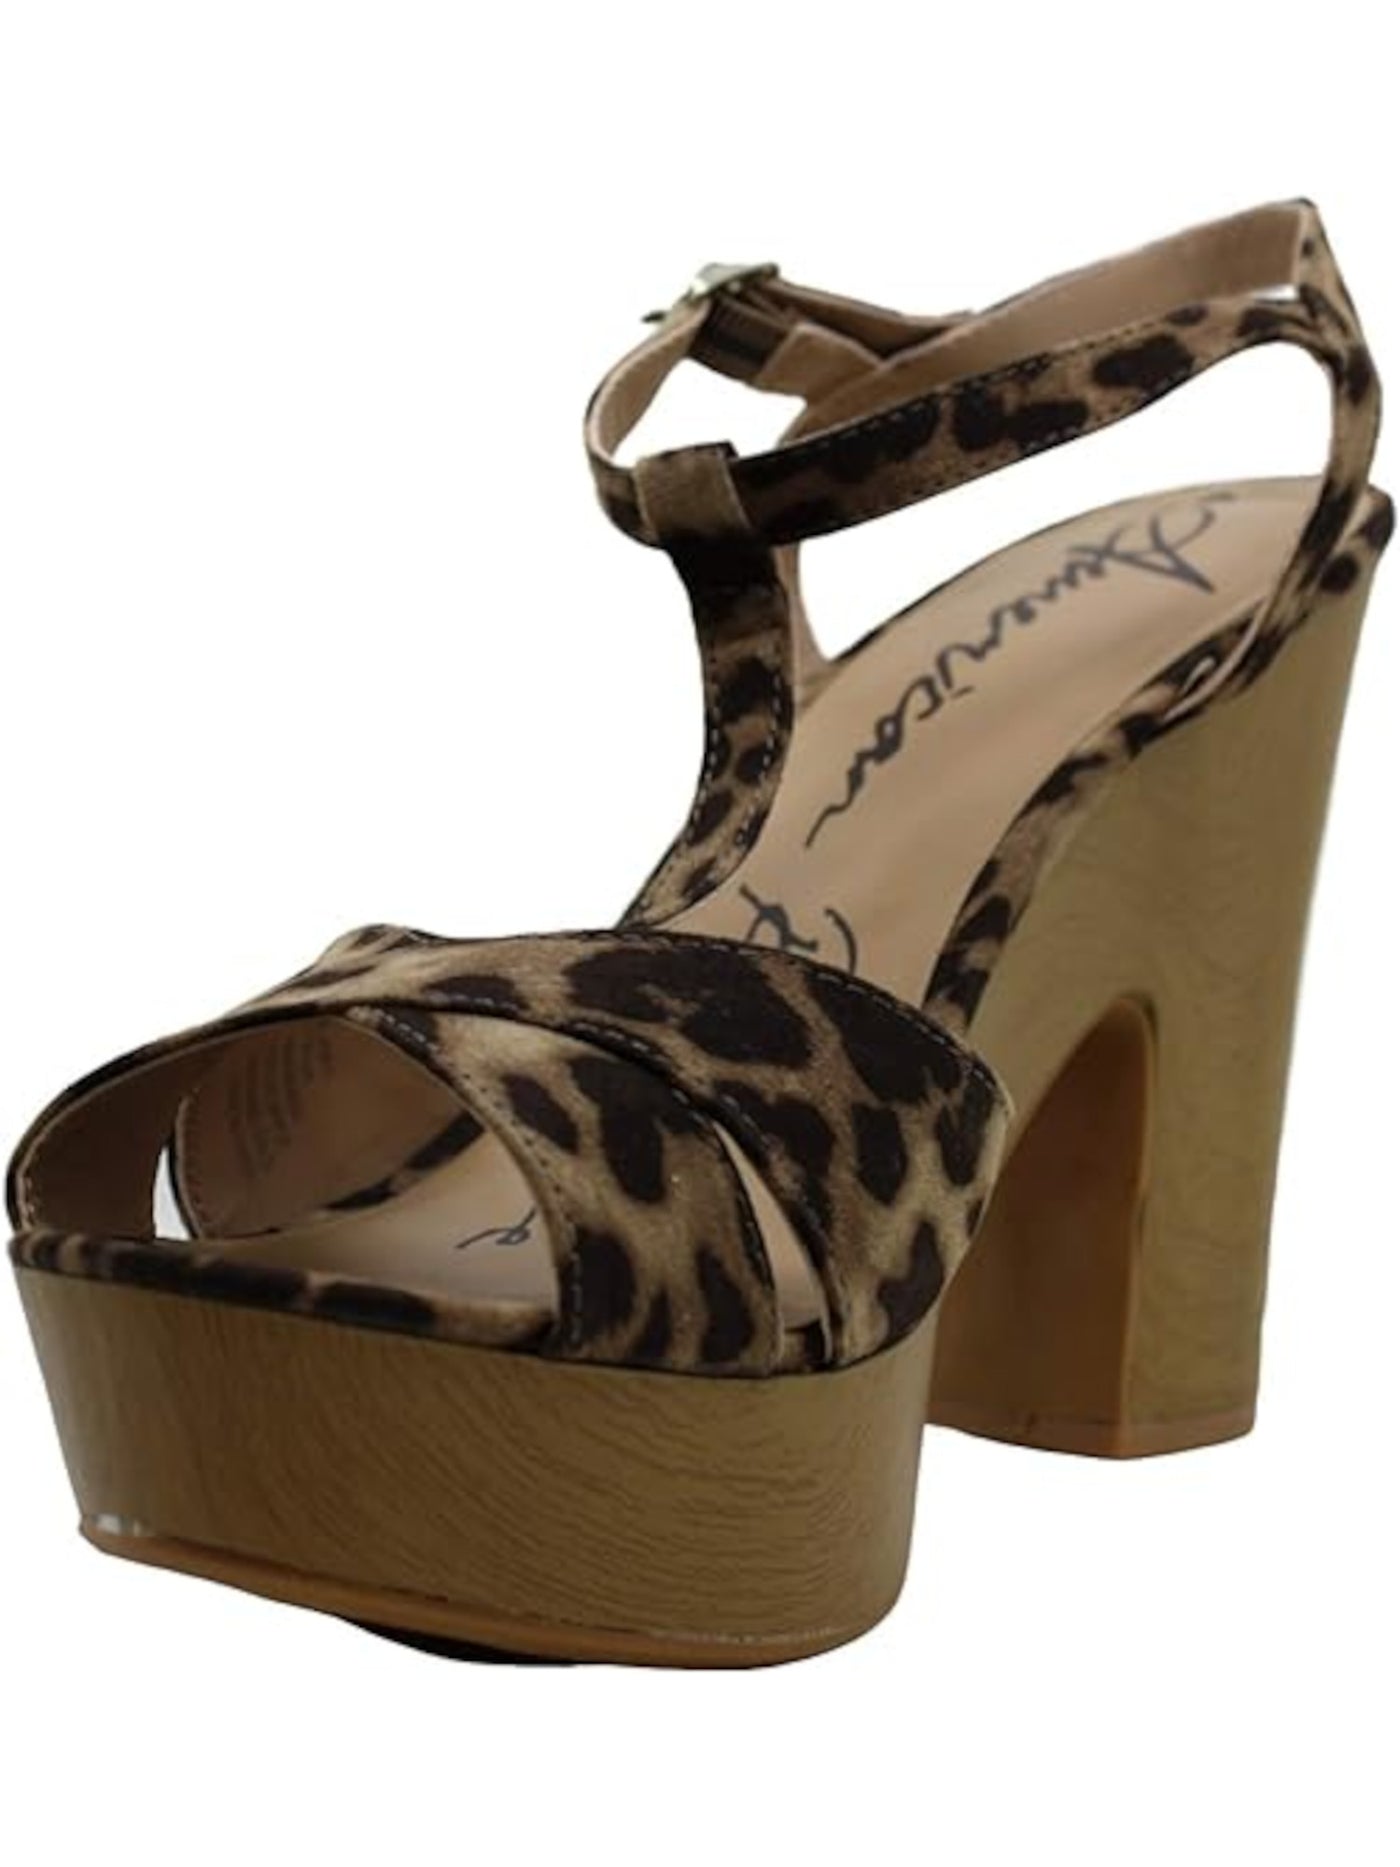 AMERICAN RAG Shoes Brown Leopard Print Juniors 8 M